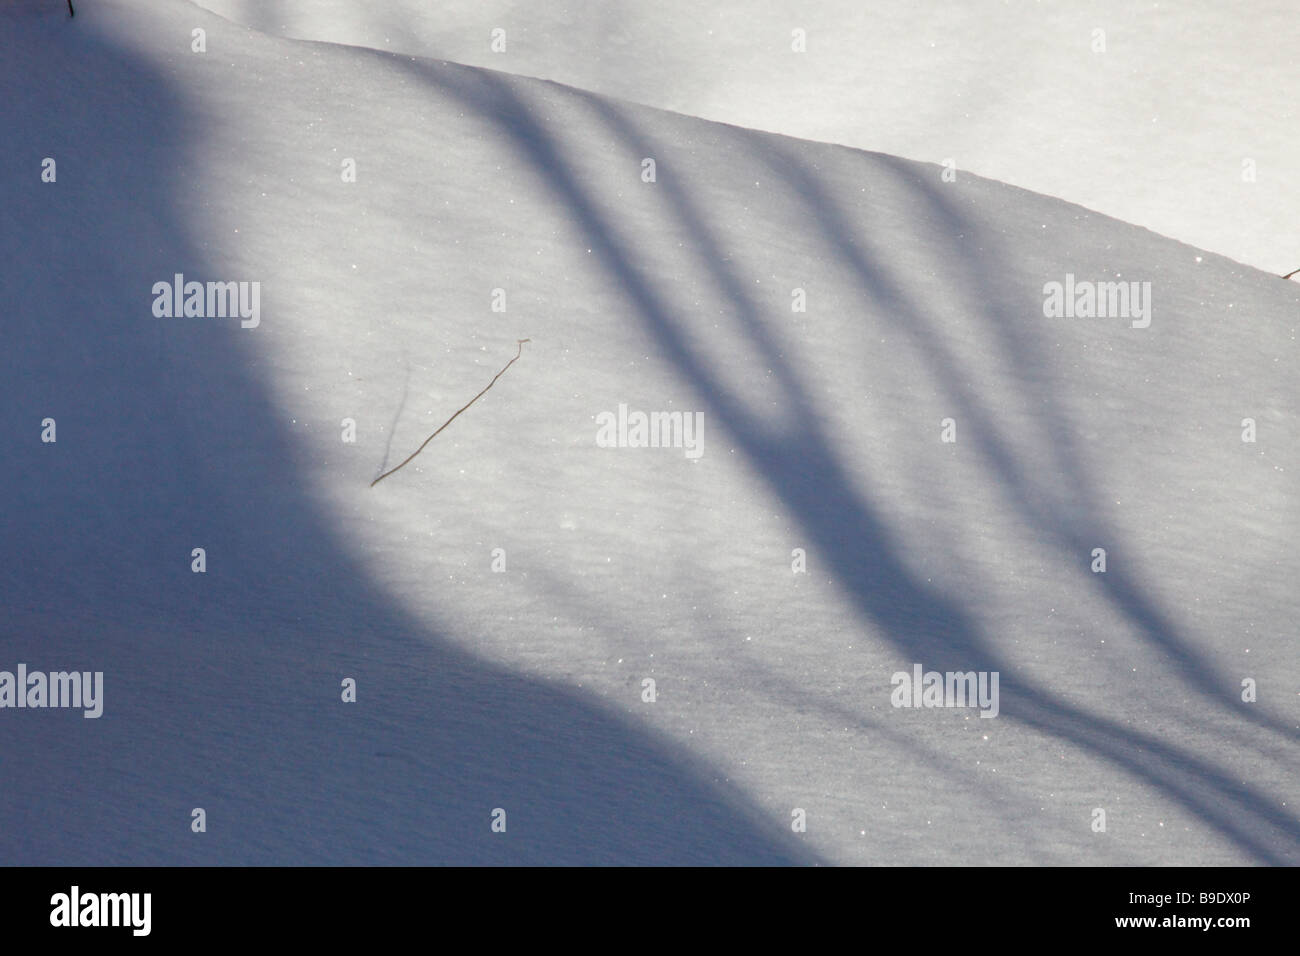 Schatten von Baeumen auf Schnee. Le ombre degli alberi sulla neve. Ombre d arbres sur neige Foto Stock